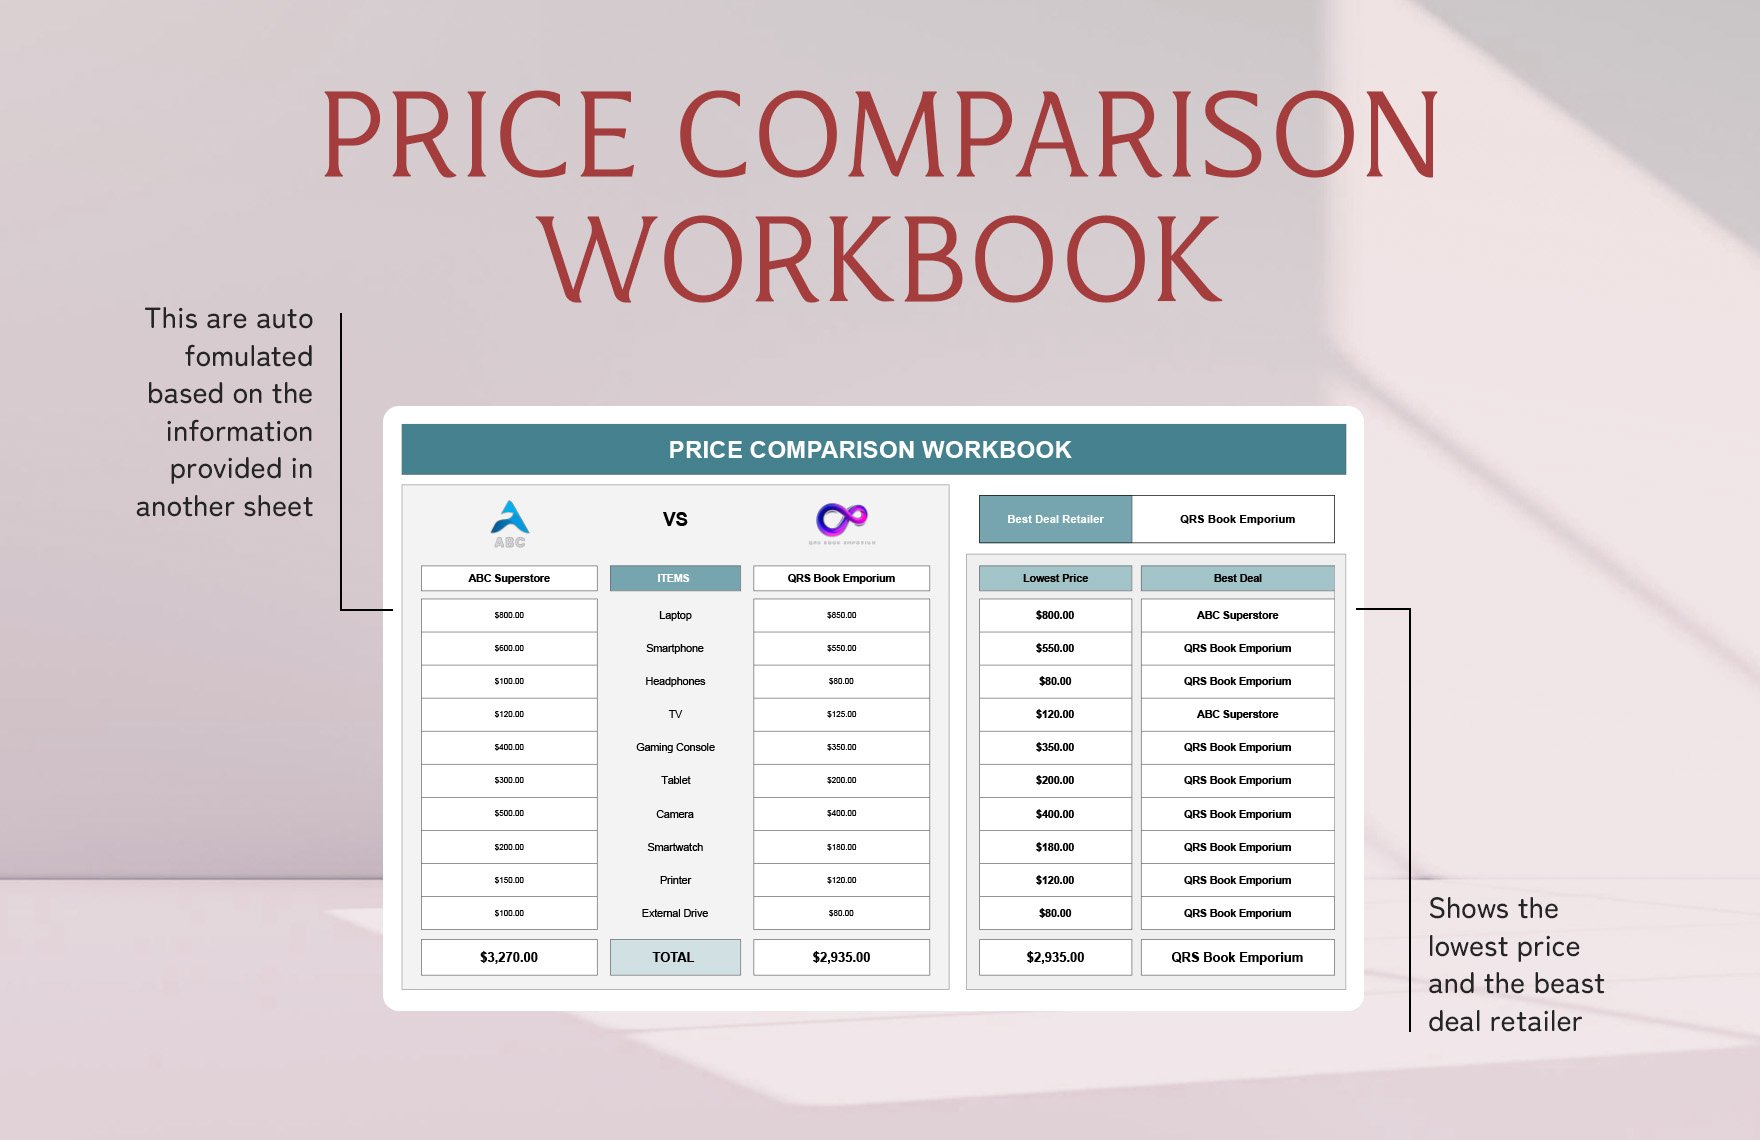 Price Comparison Workbook Template